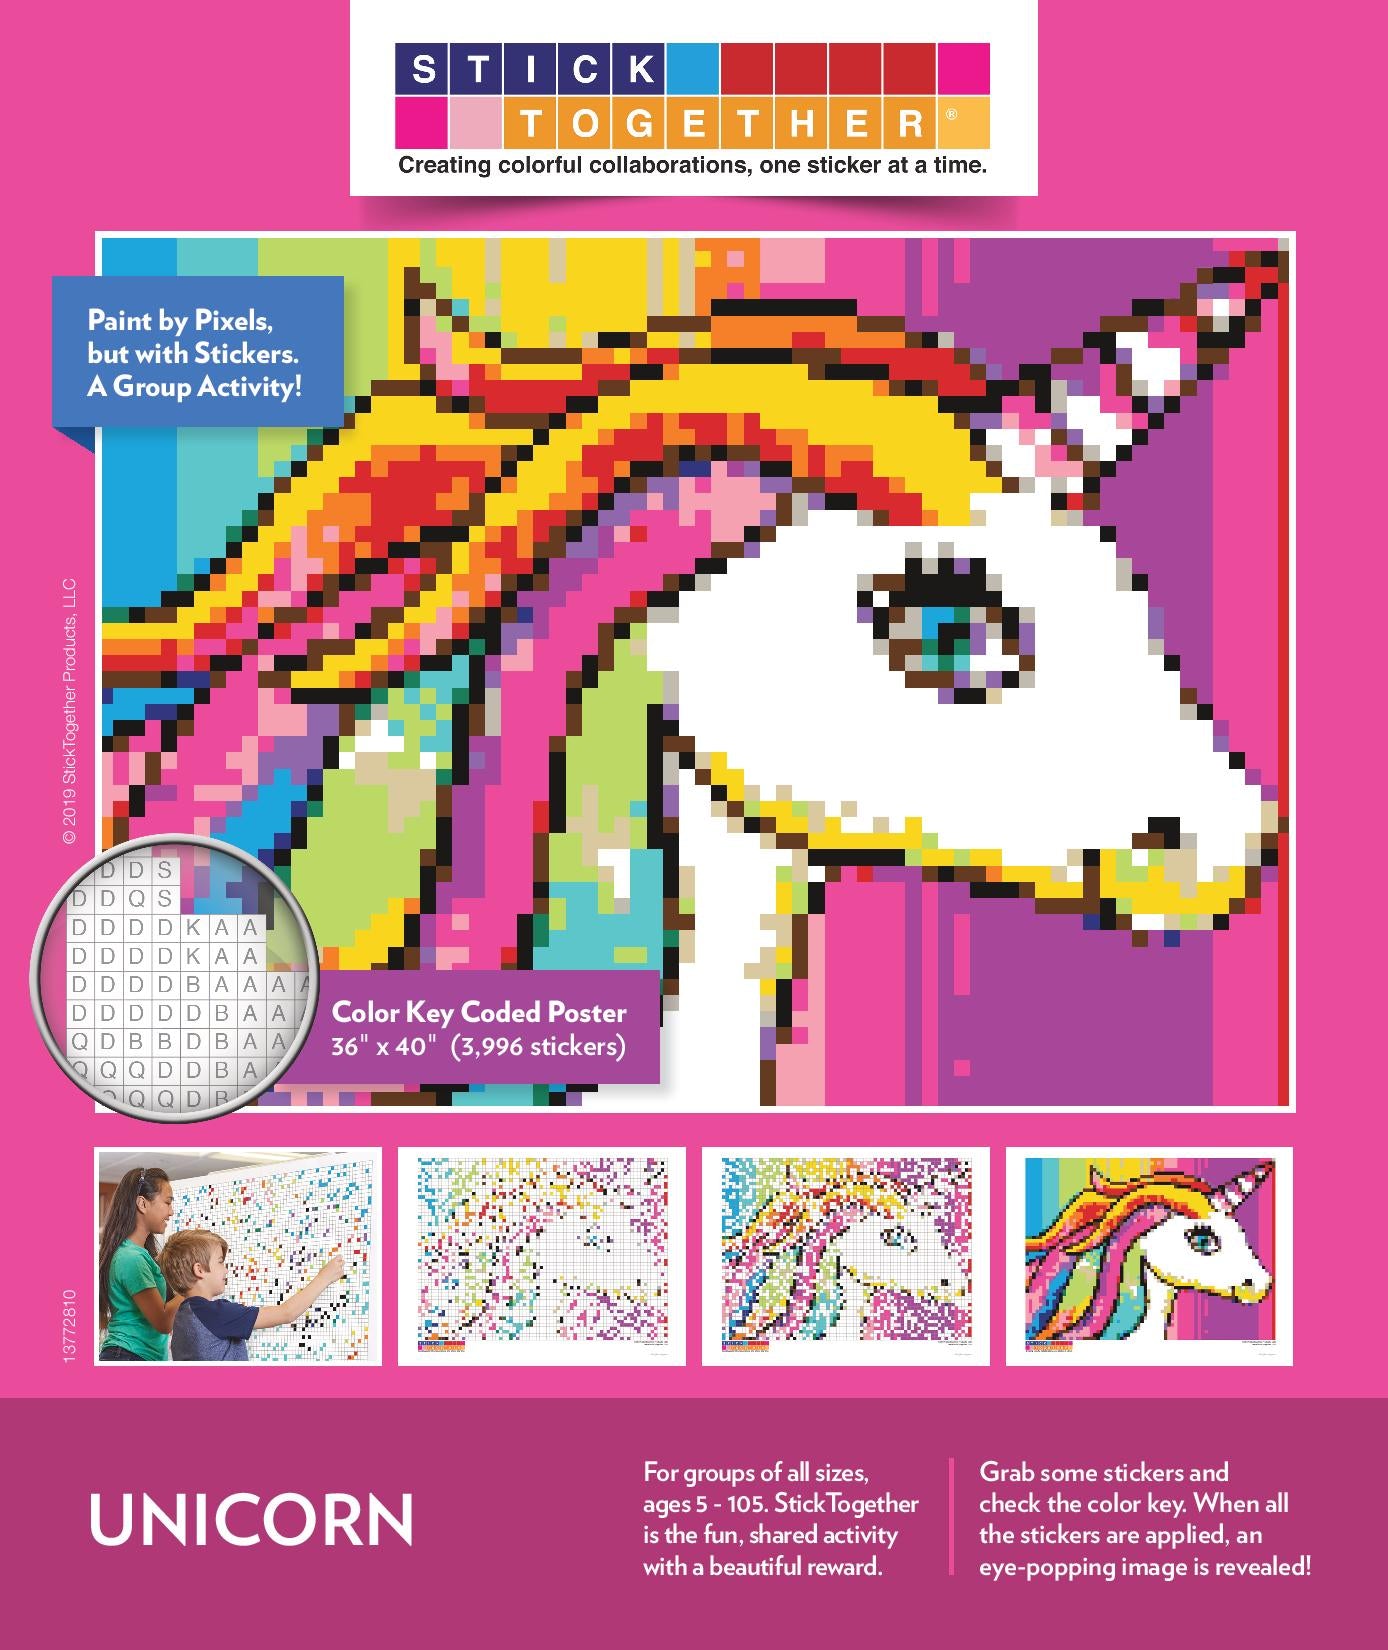 Unicorn – StickTogether Products, LLC